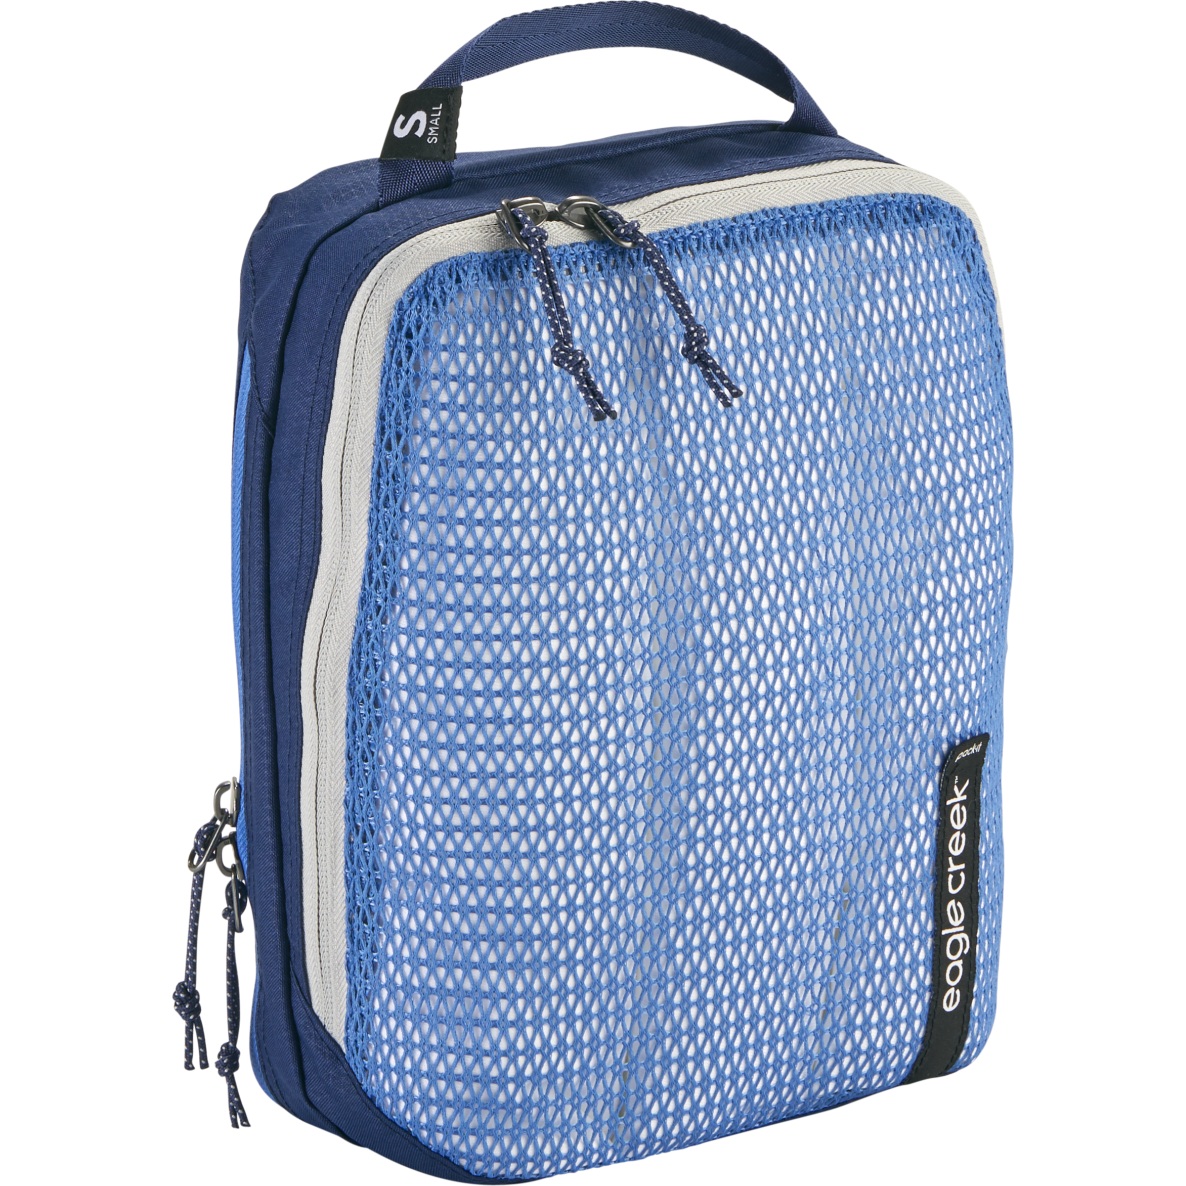 Productfoto van Eagle Creek Pack-It™ Reveal Clean/Dirty Cube S - Tas Organizer - aizome blue grey